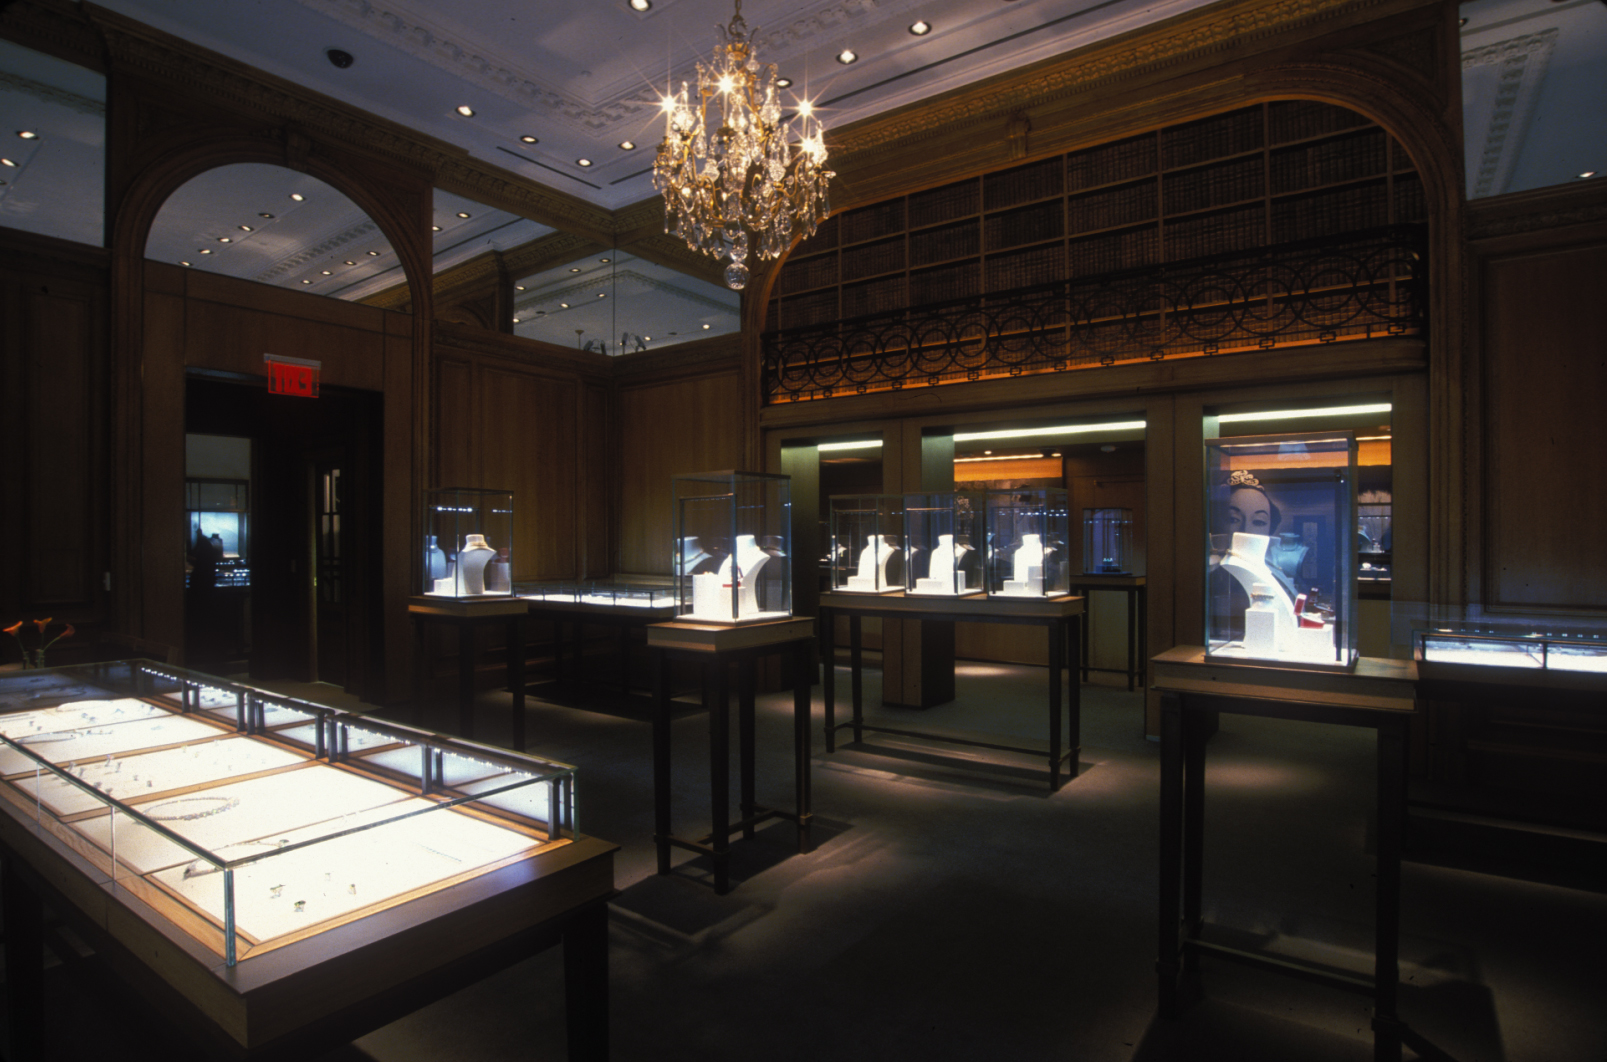 Photos Inside Cartier in New York